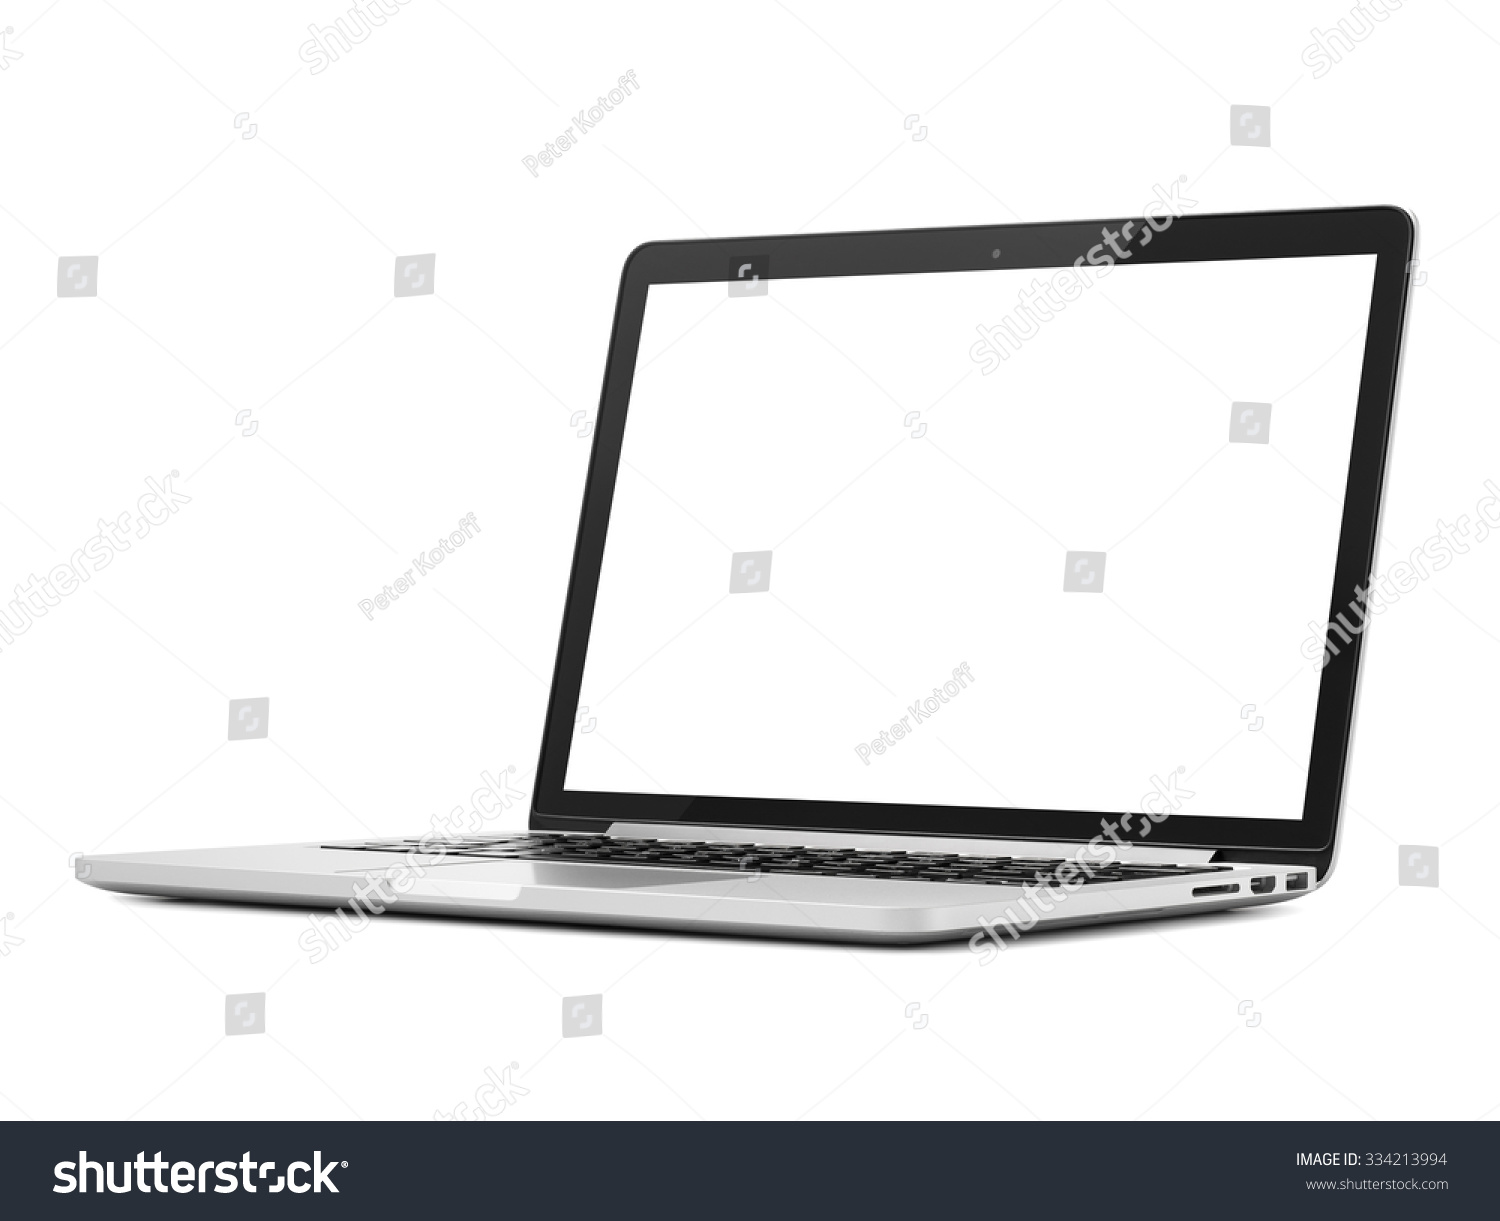 Laptop close-up on white background, isolated #334213994